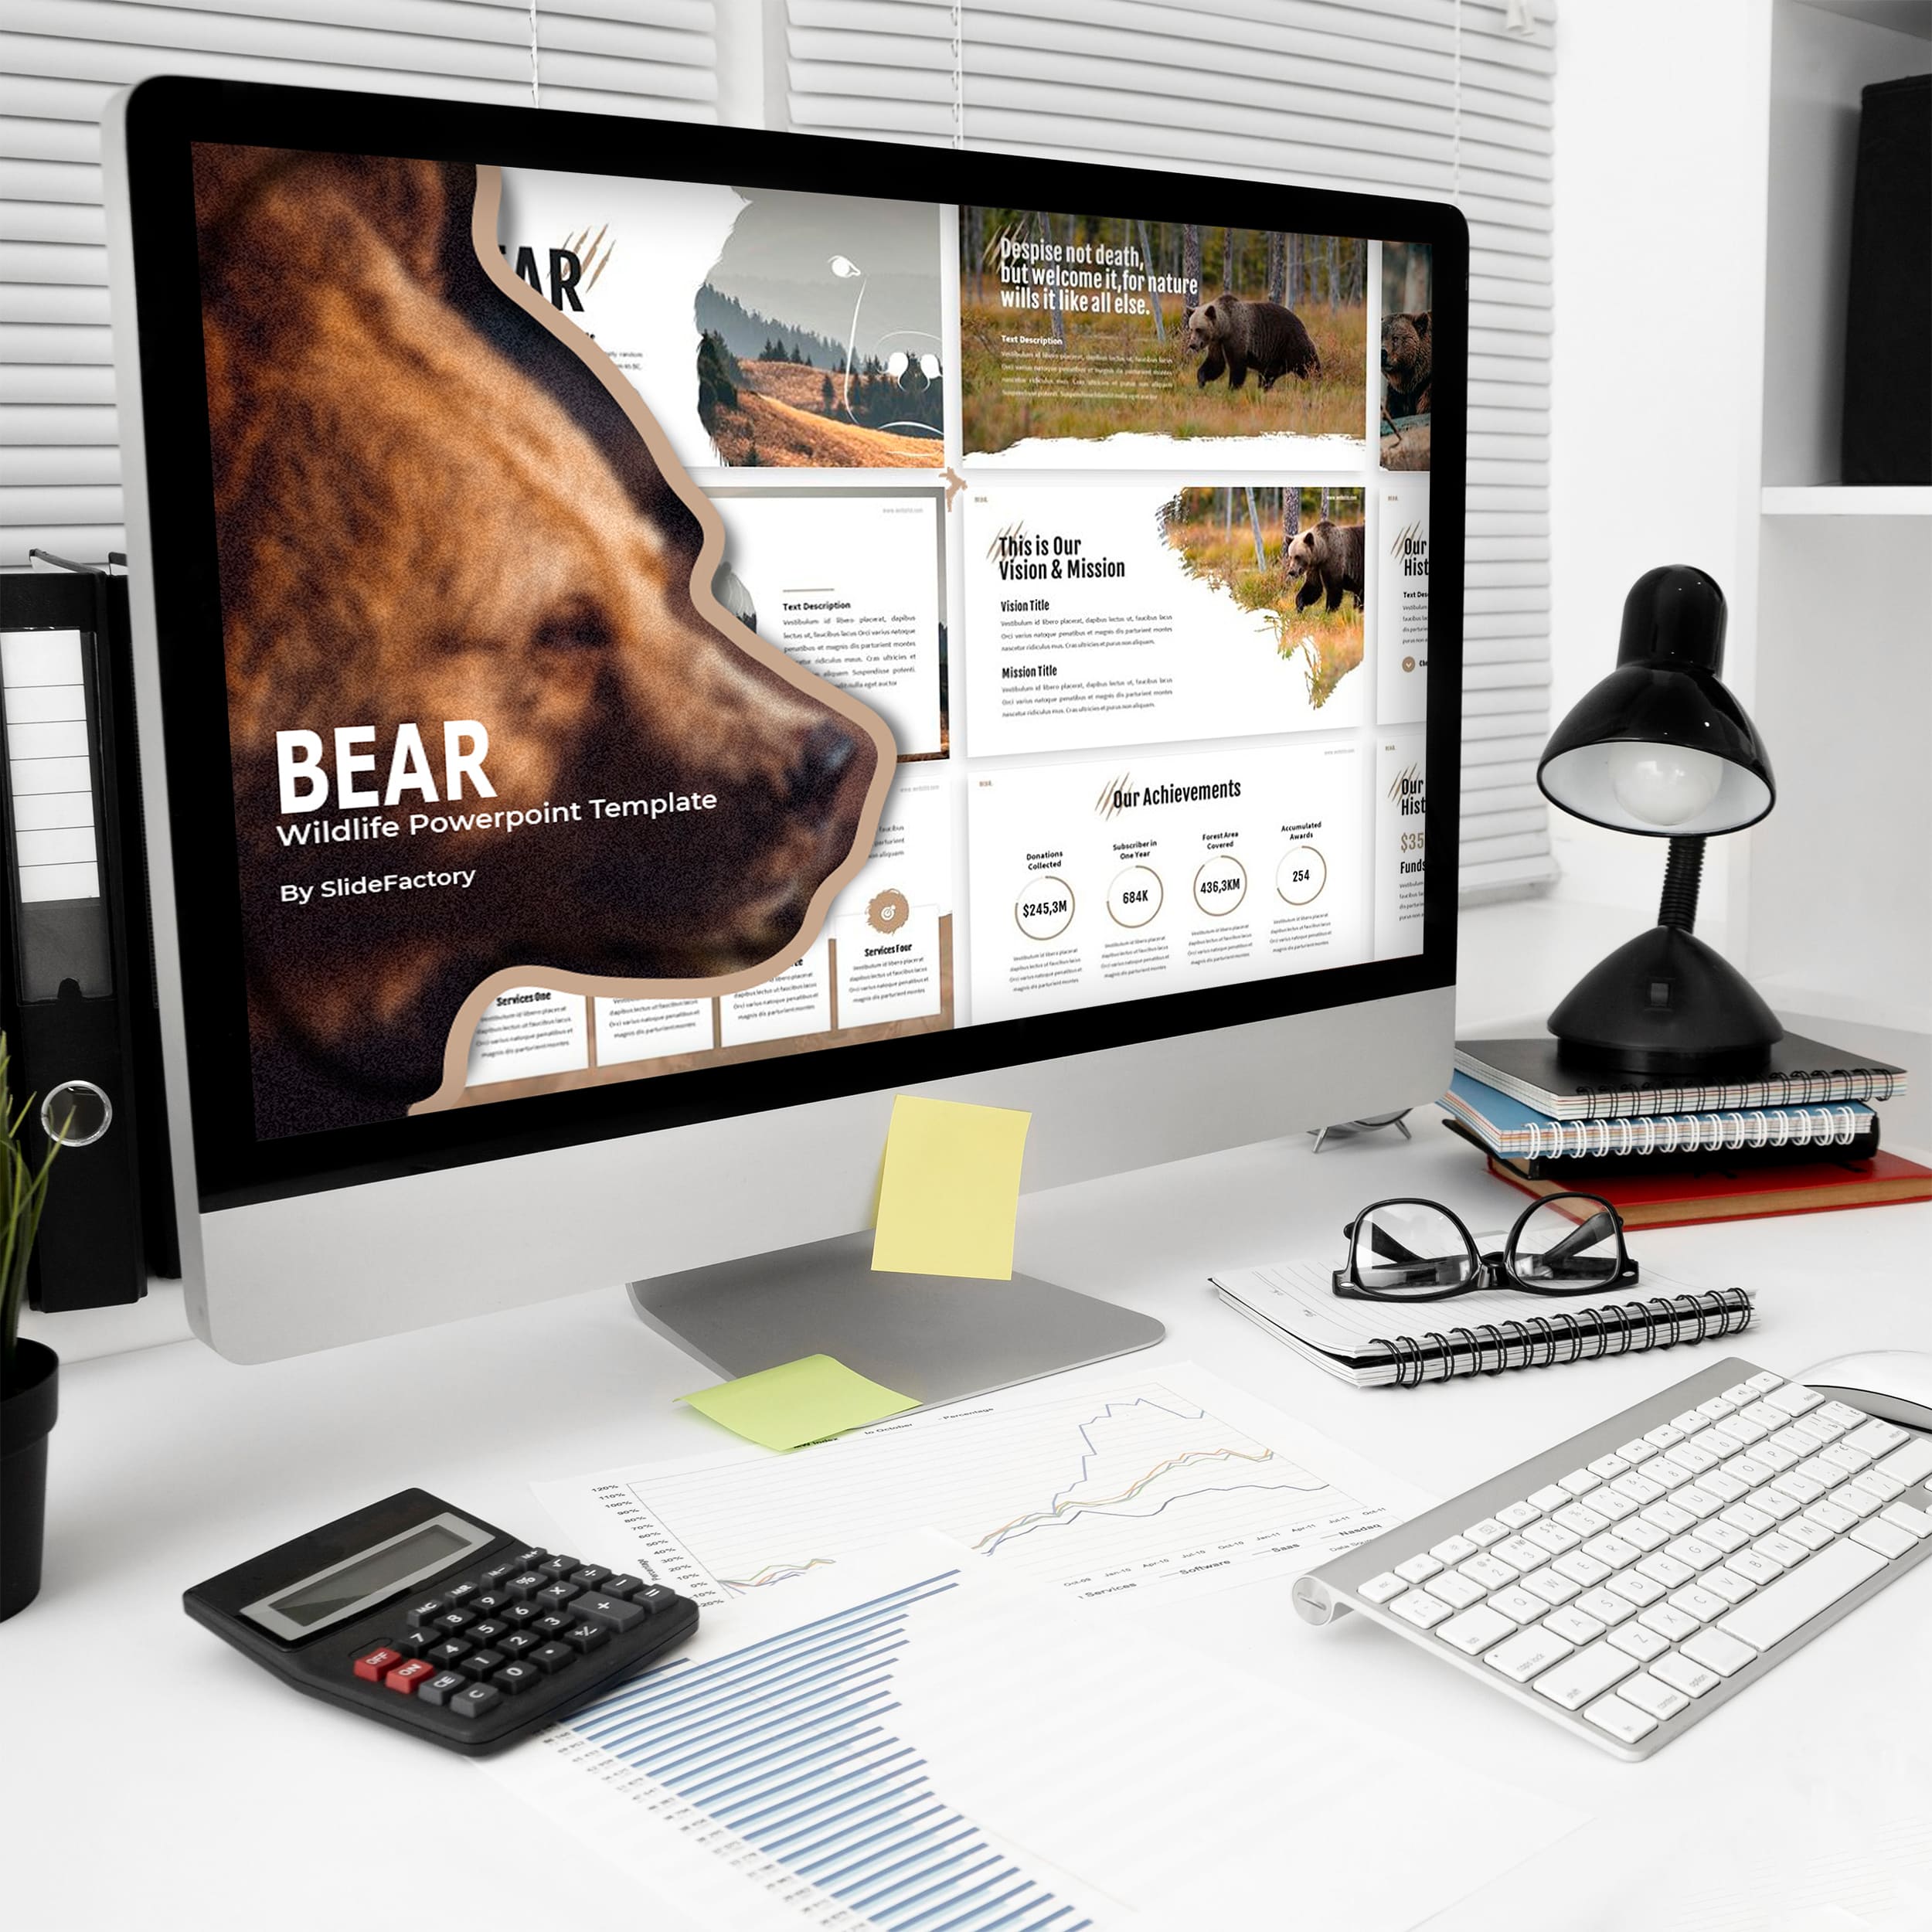 Bear Wildlife Powerpoint Template - Mockup on Desktop.